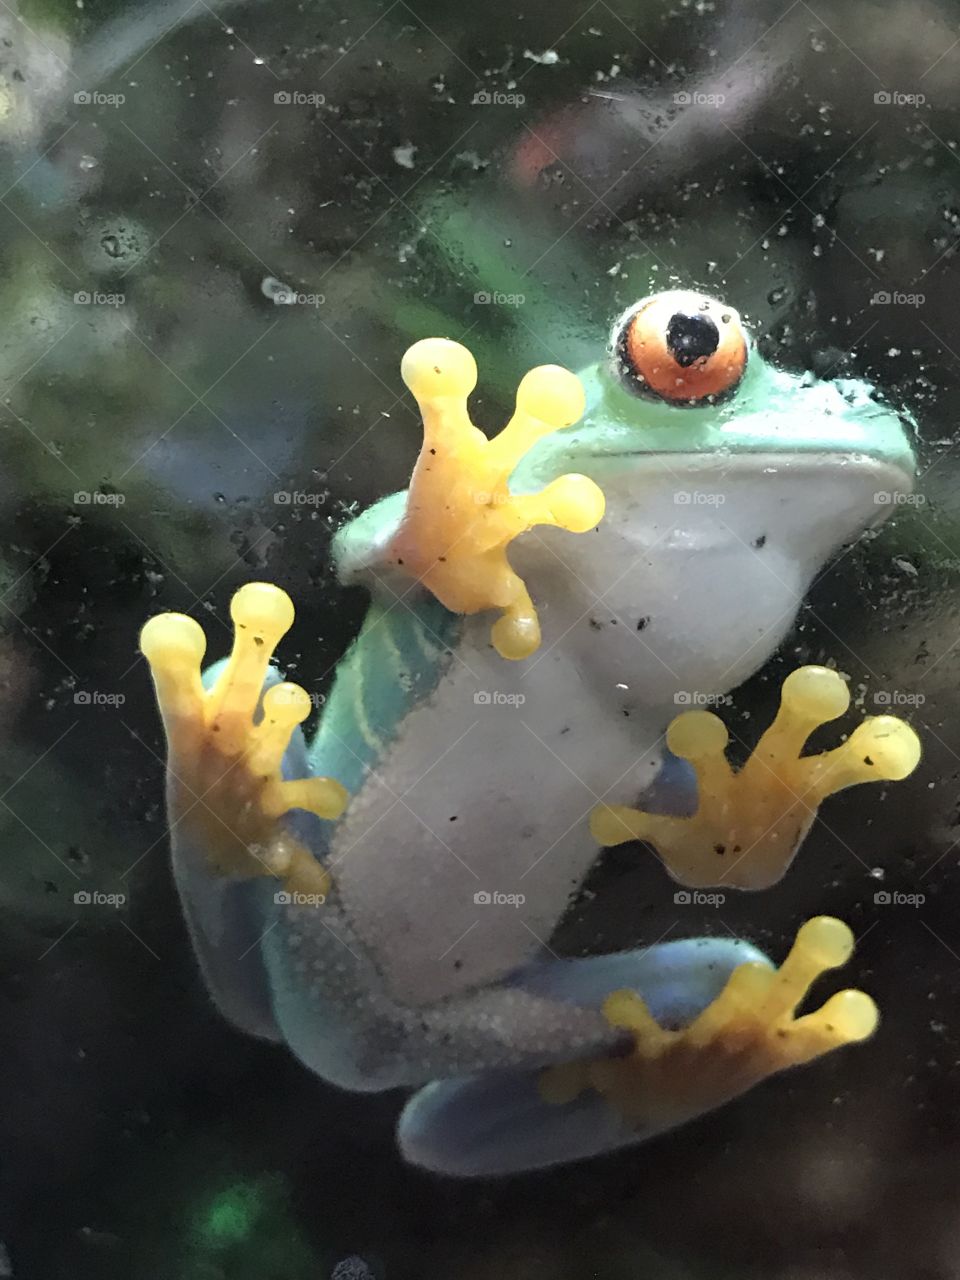 I see you Mr Frog